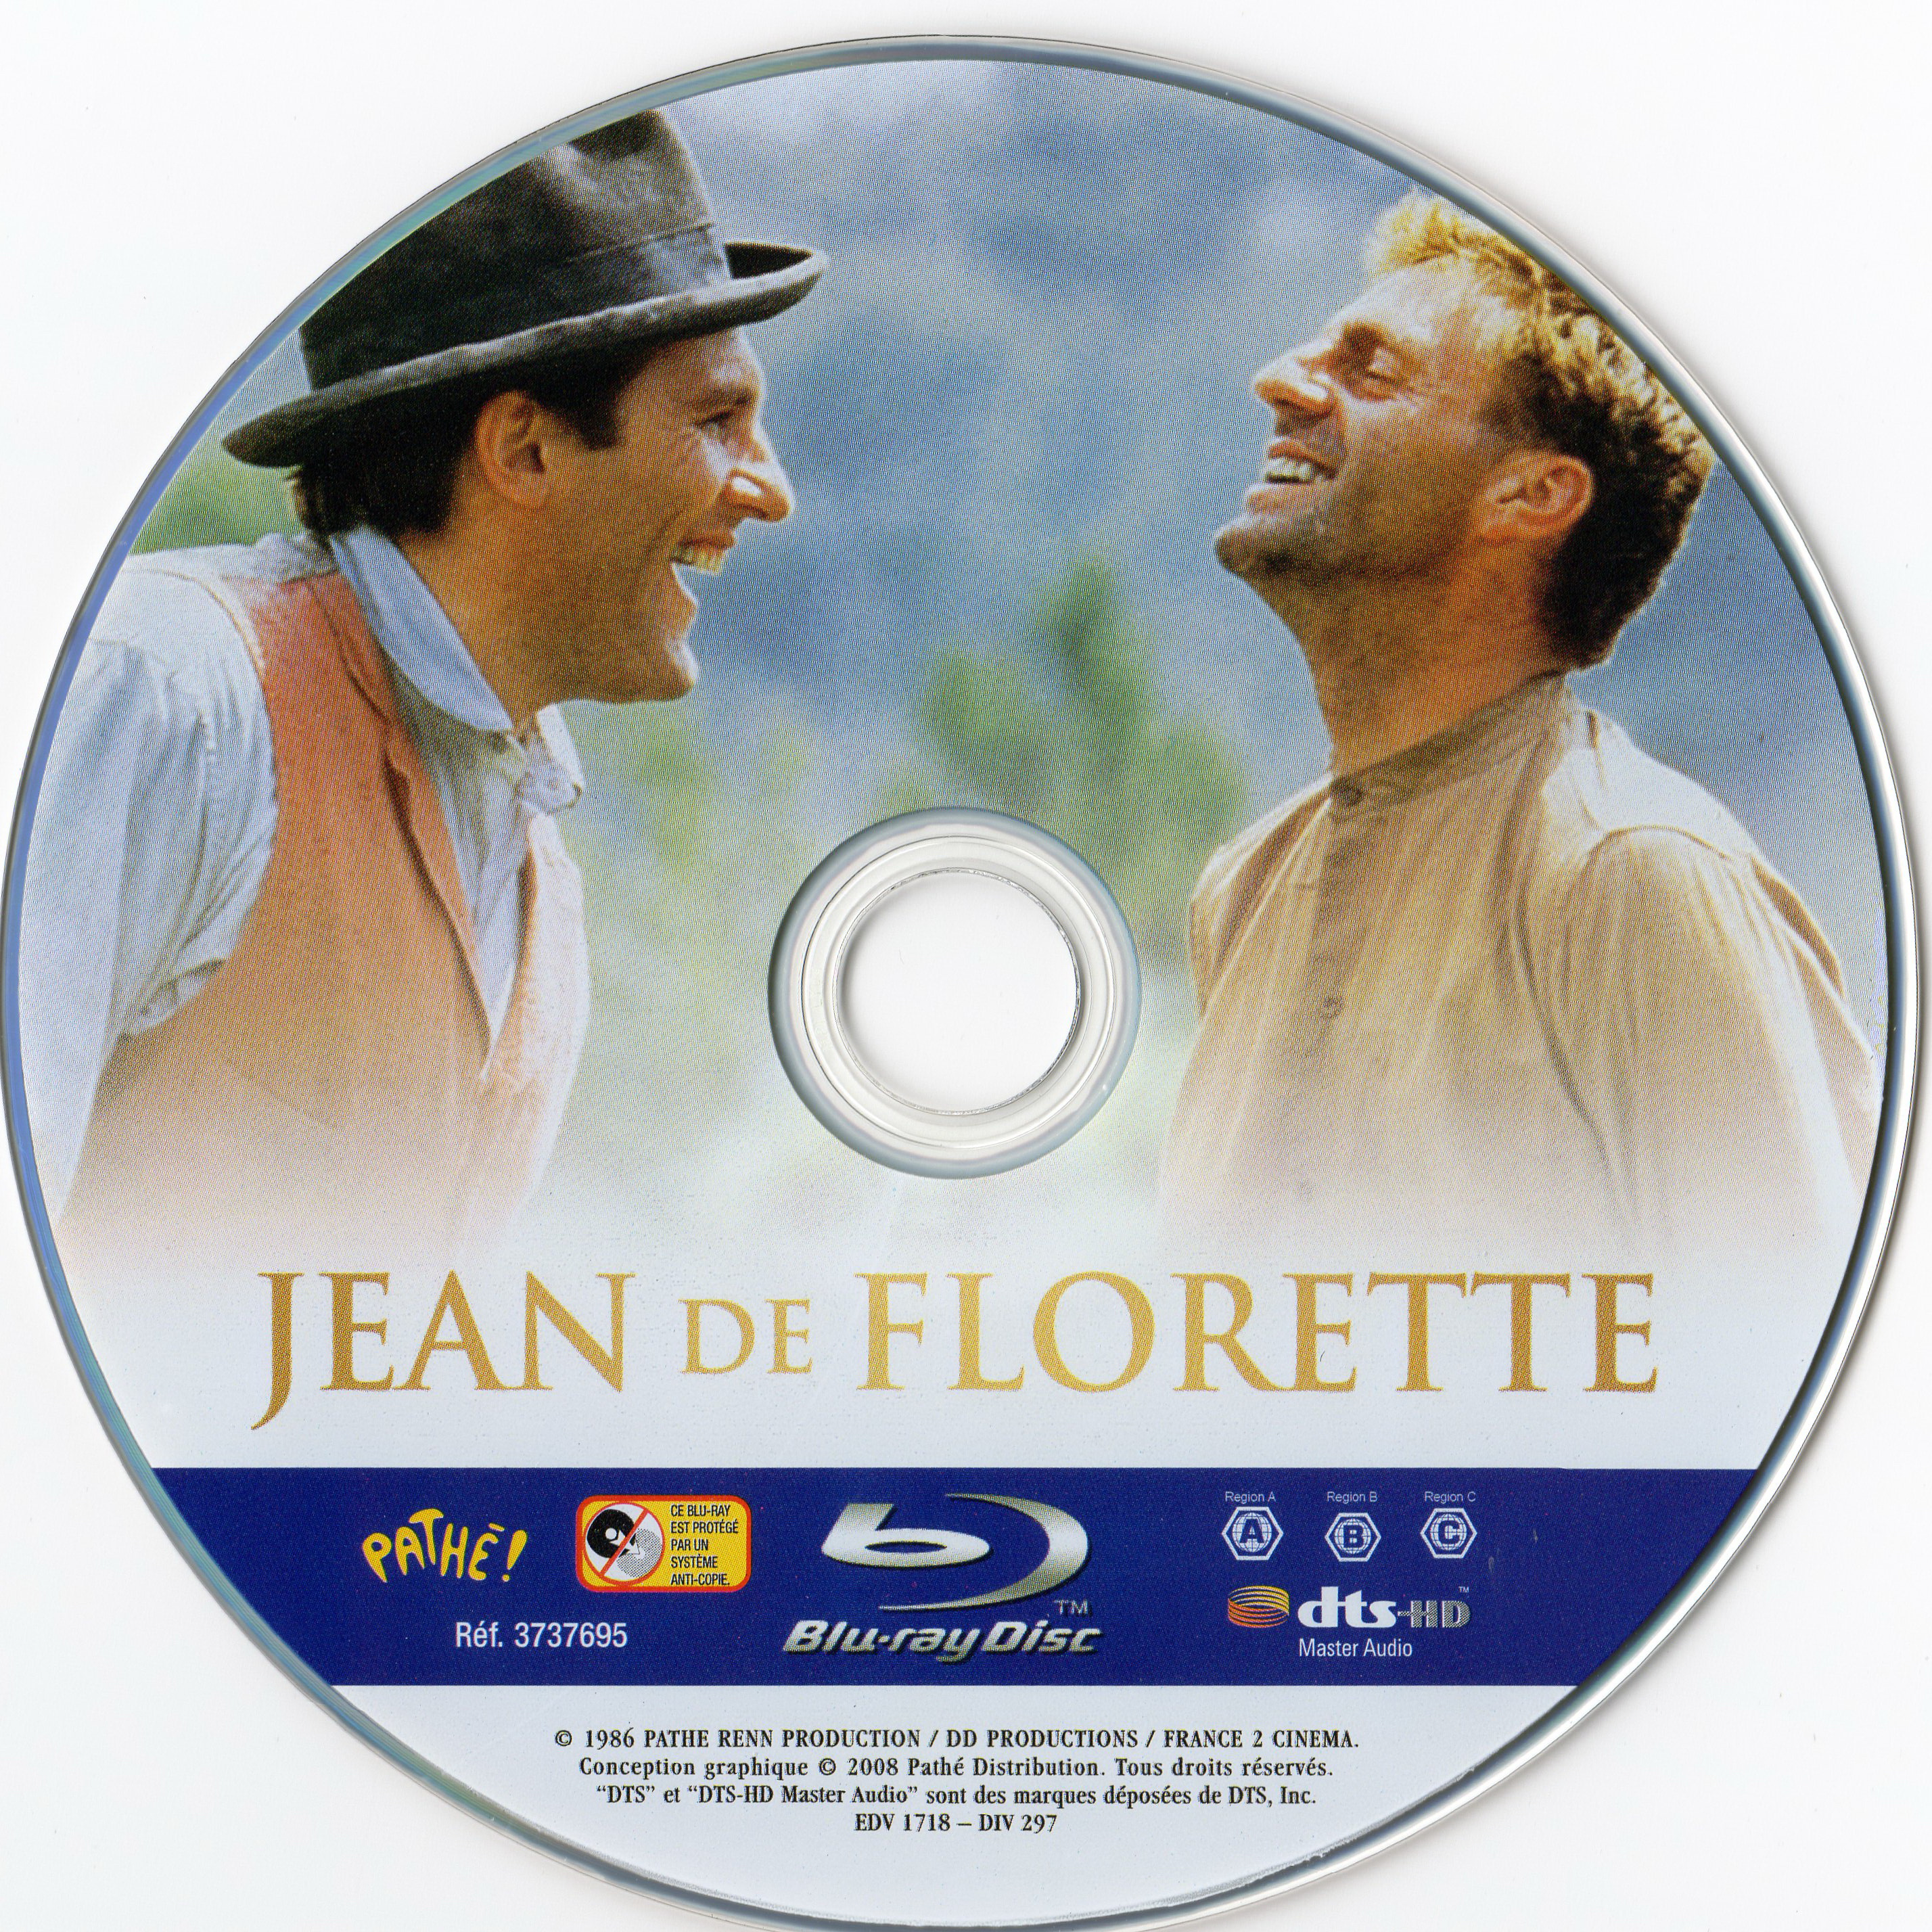 Jean de florette (BLU-RAY)